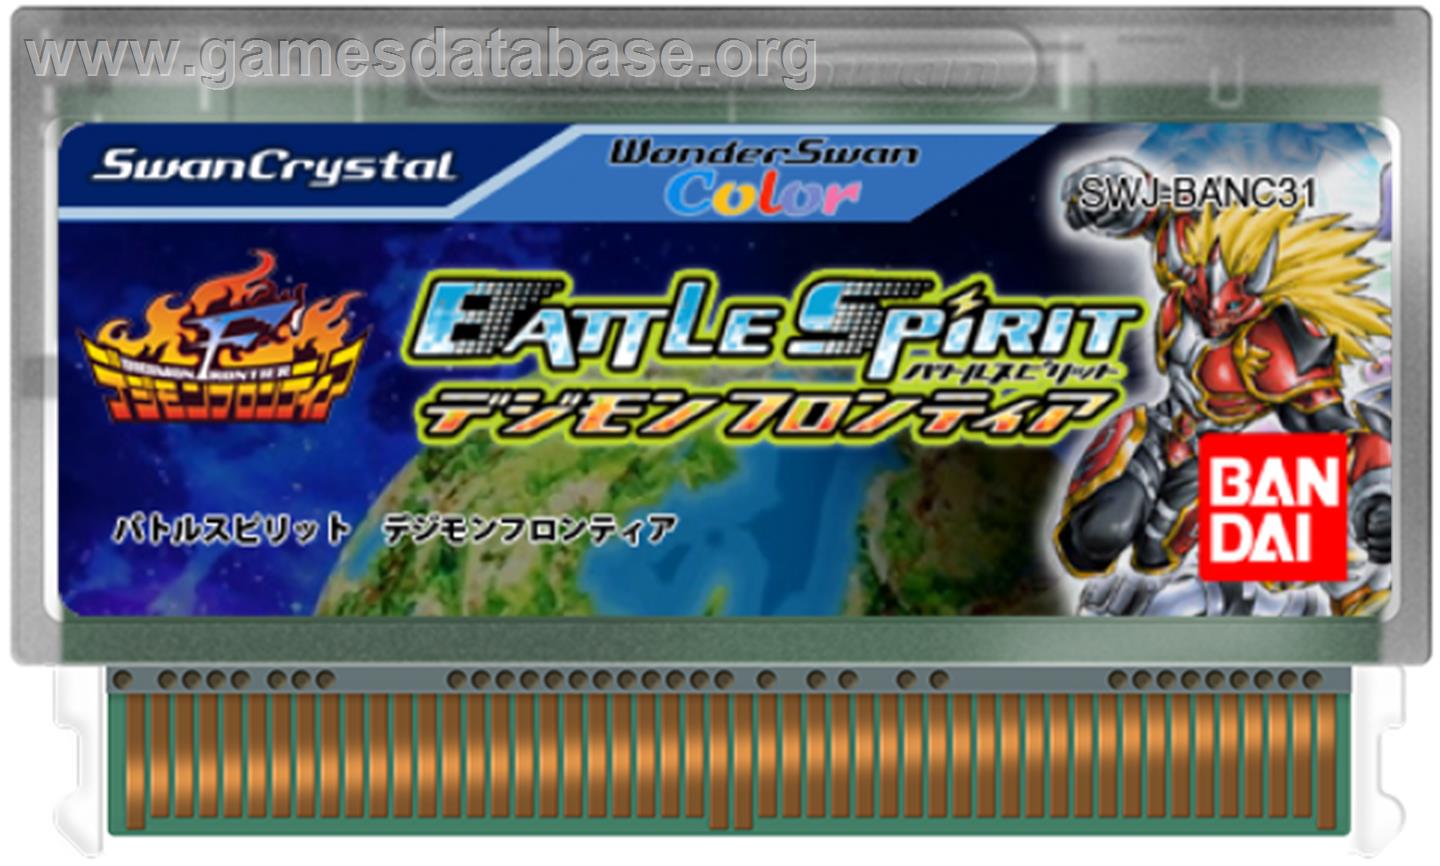 Digimon Frontier: Battle Spirit - Bandai WonderSwan Color - Artwork - Cartridge